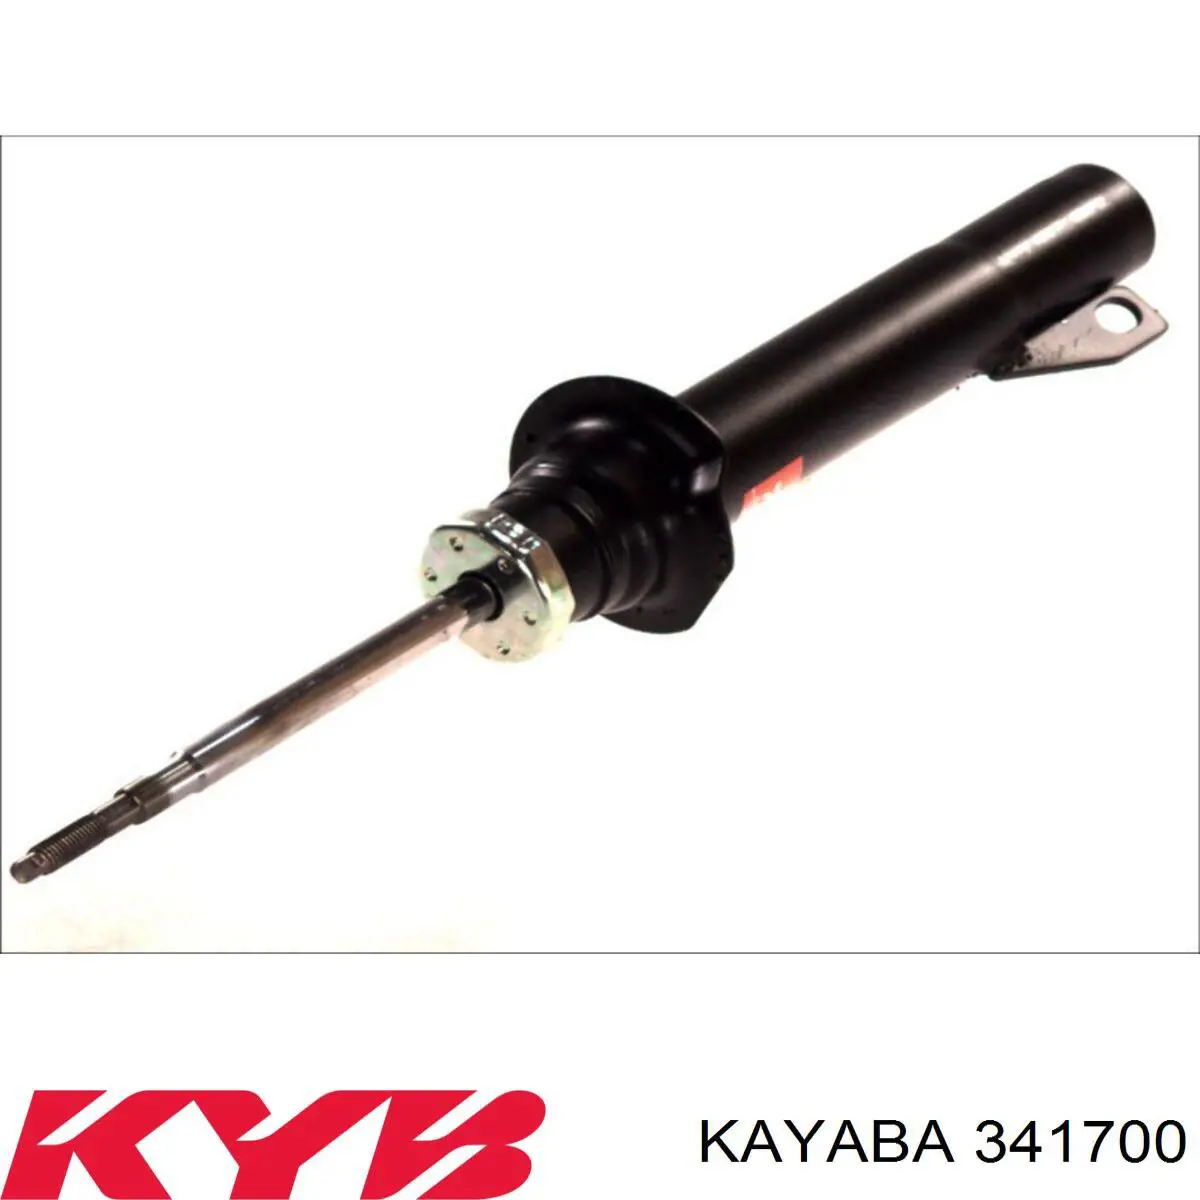 341700 Kayaba amortecedor dianteiro